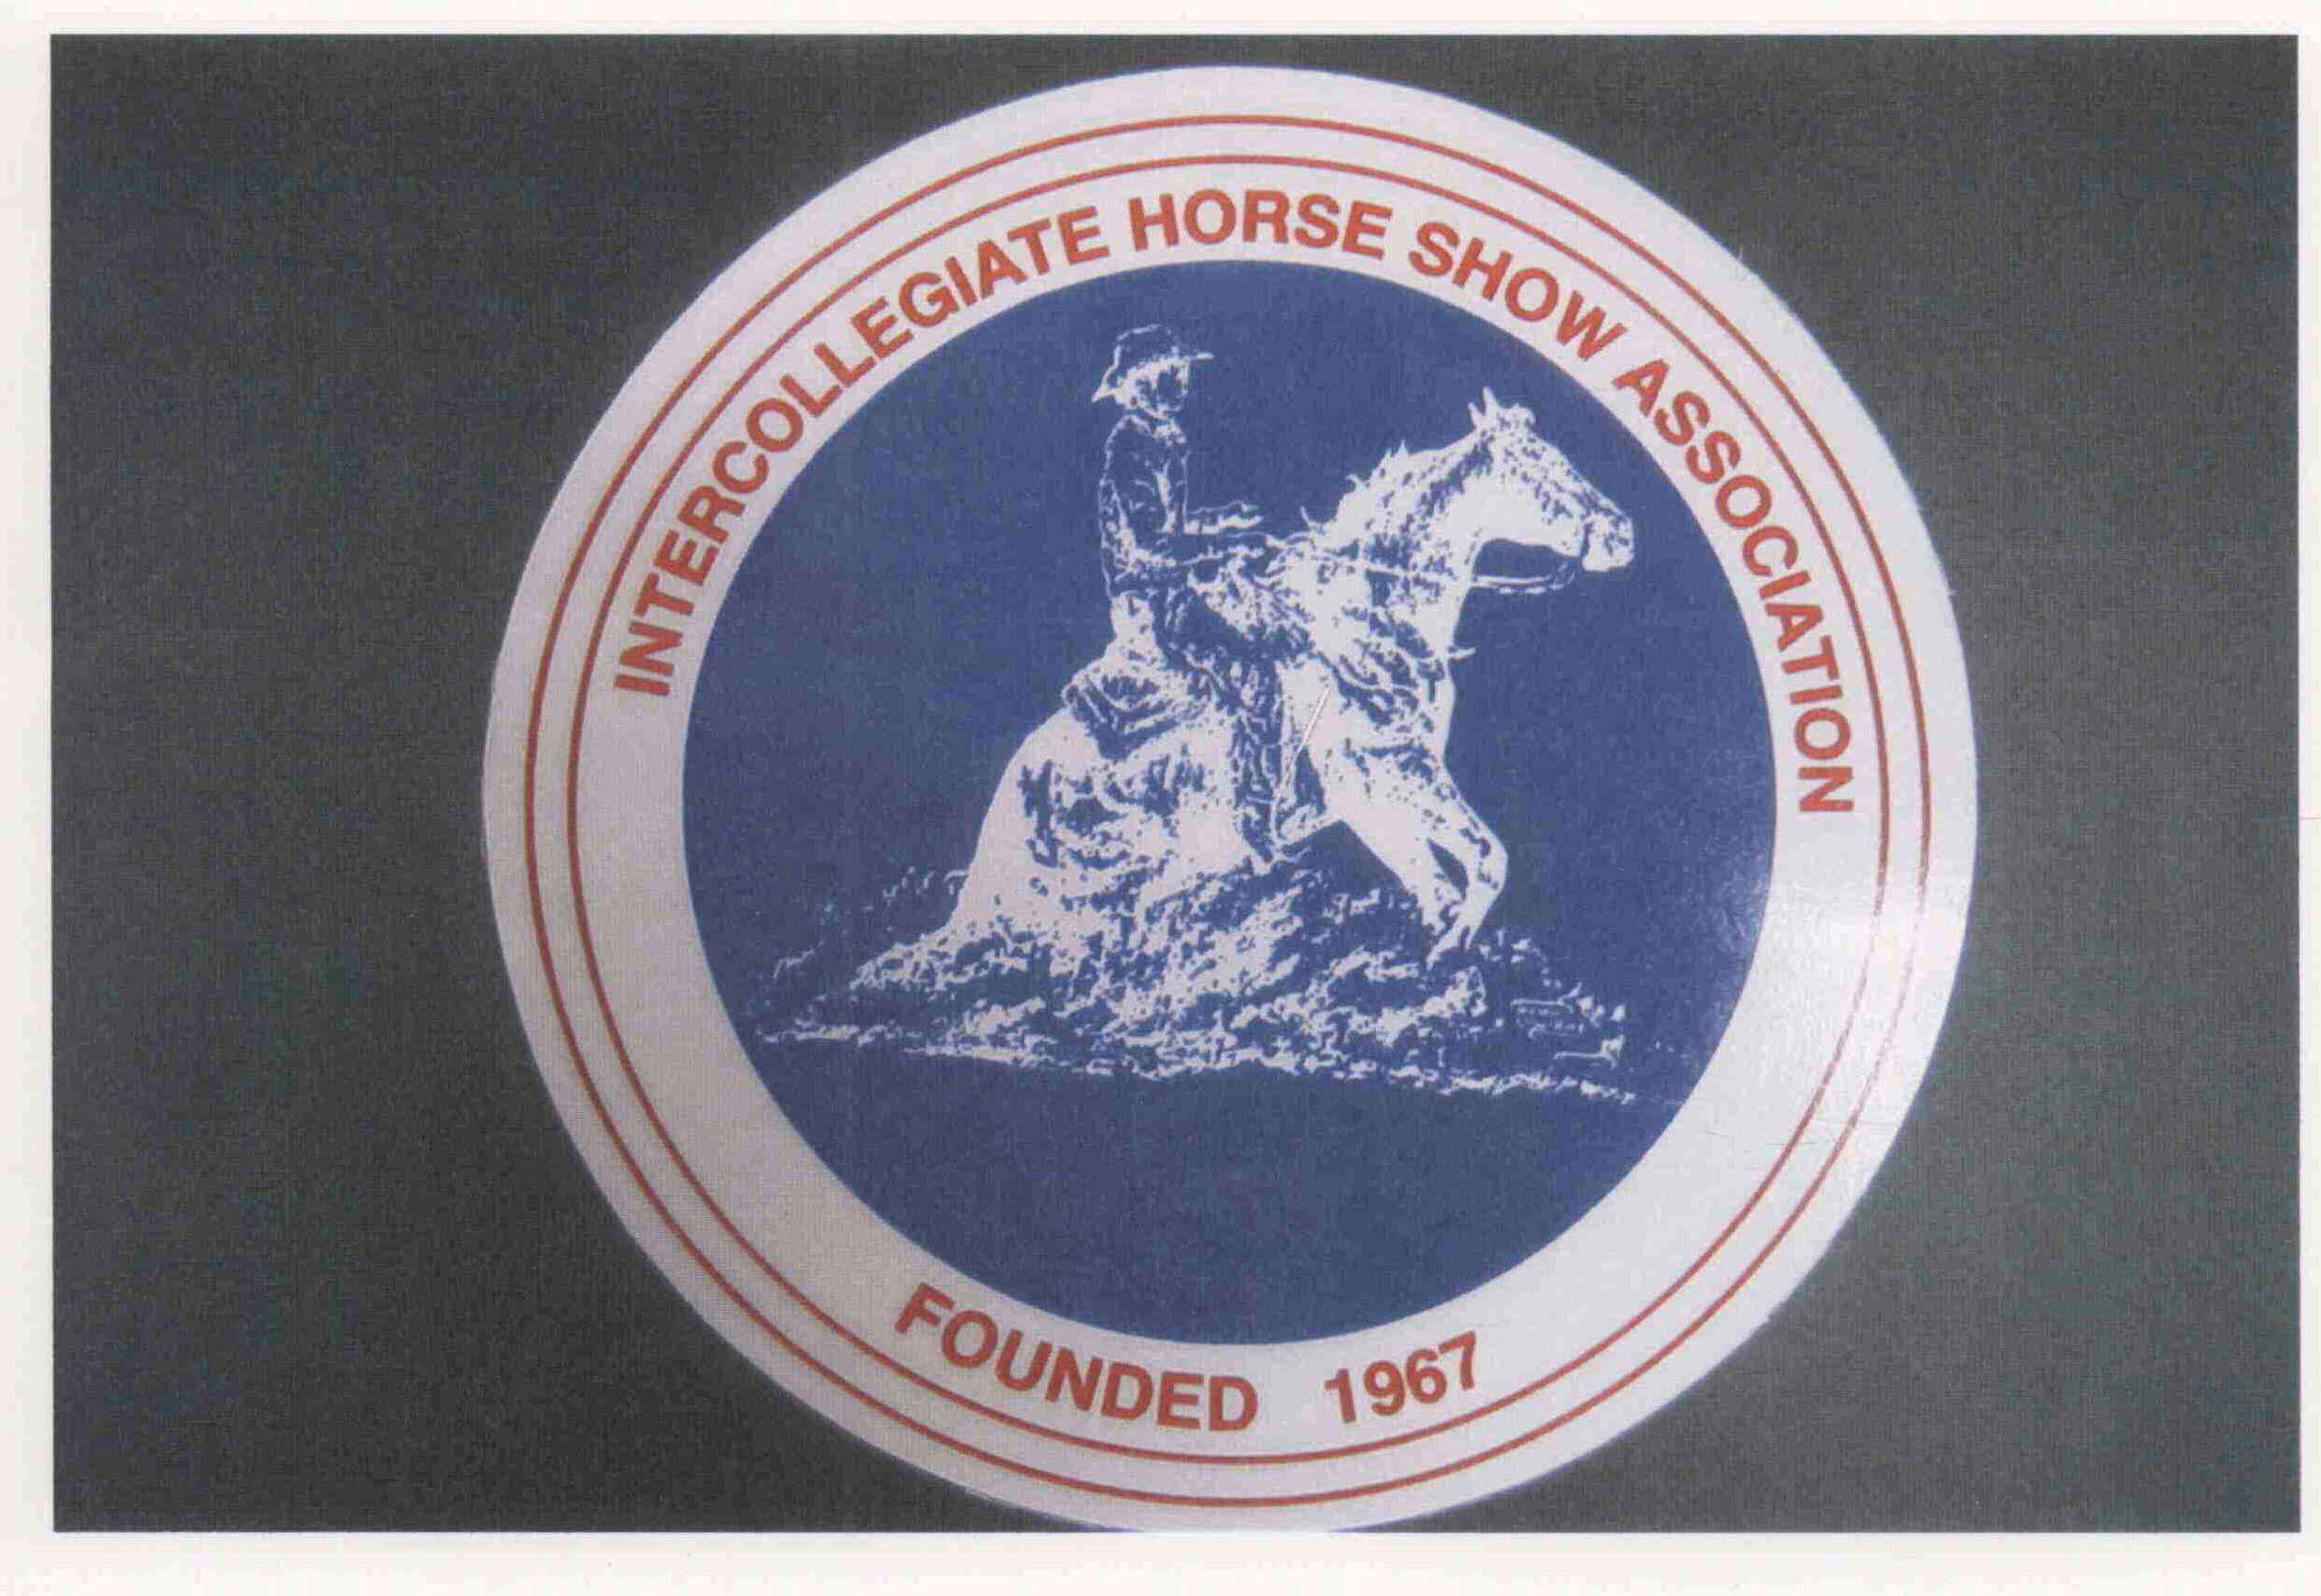  INTERCOLLEGIATE HORSE SHOW ASSOCIATION FOUNDED 1967